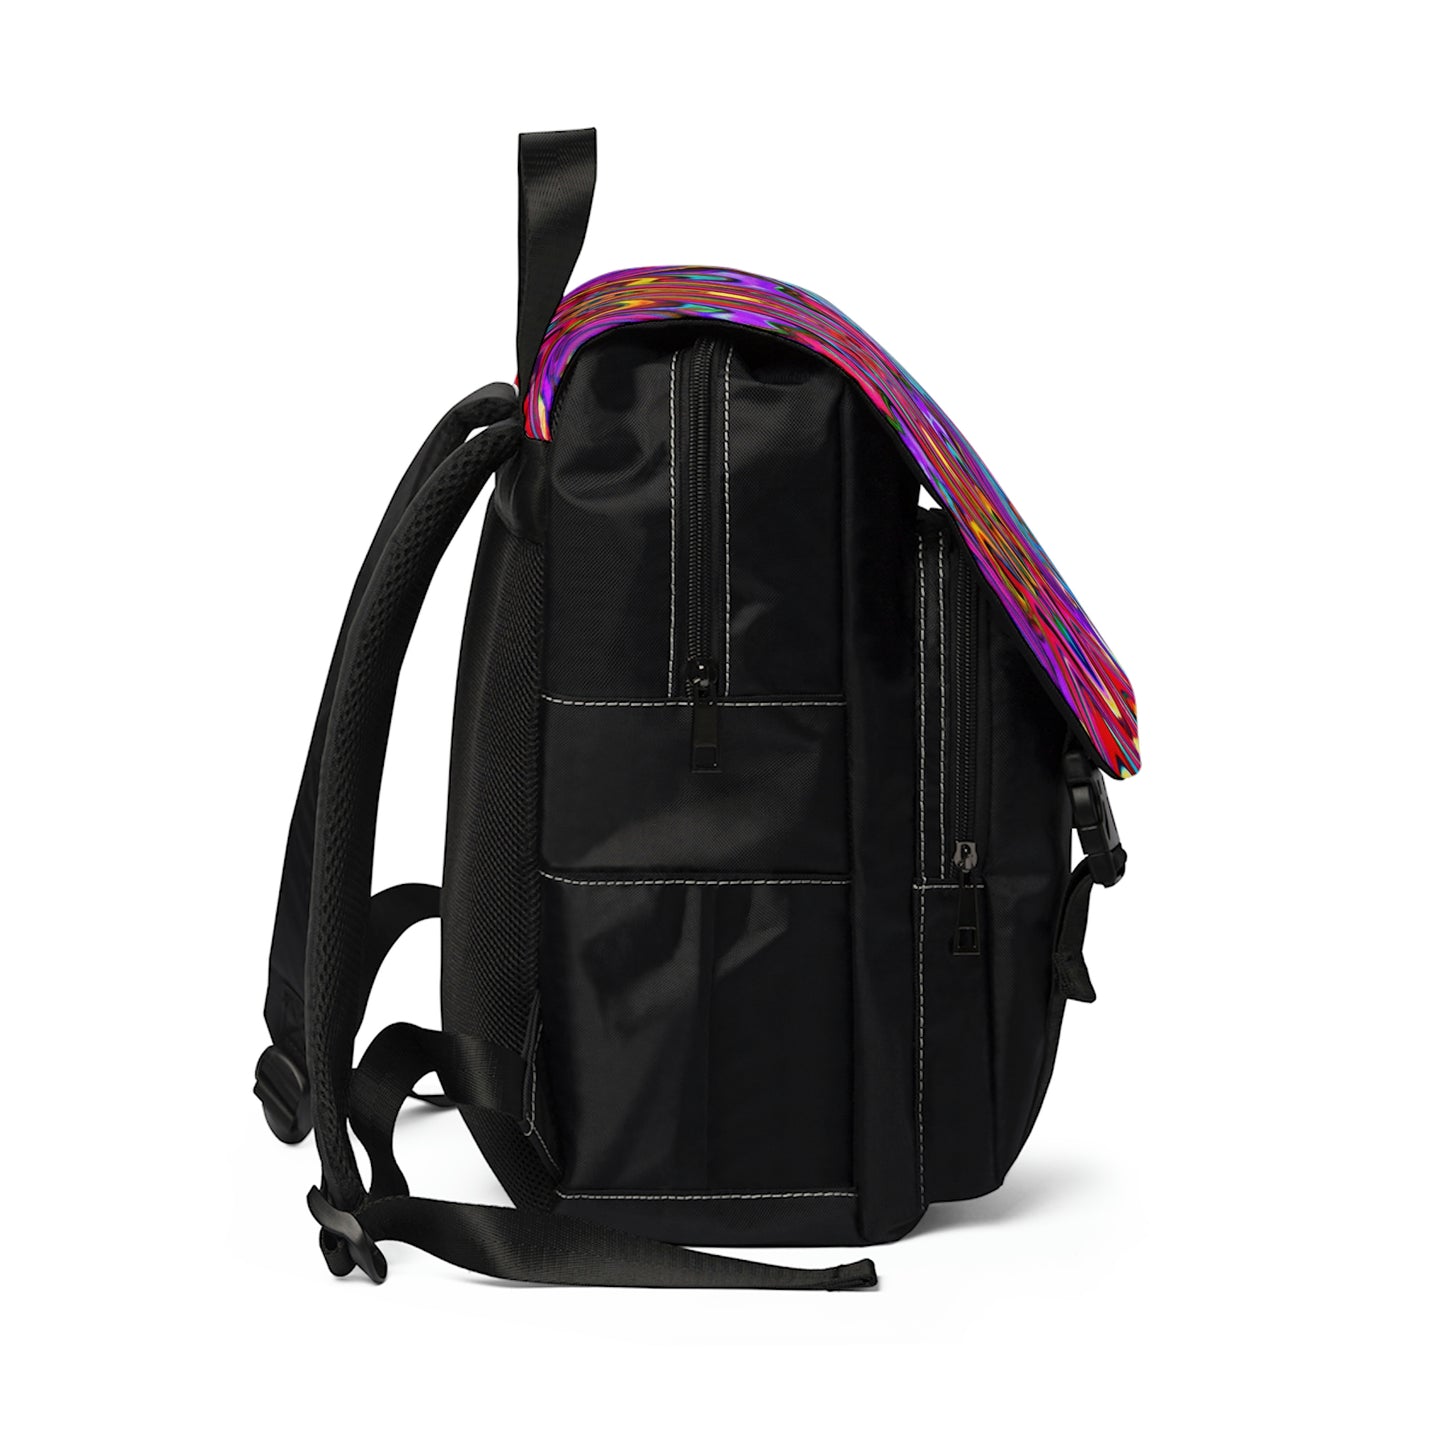 Anastasia Luxe - Psychedelic Shoulder Travel Backpack Bag